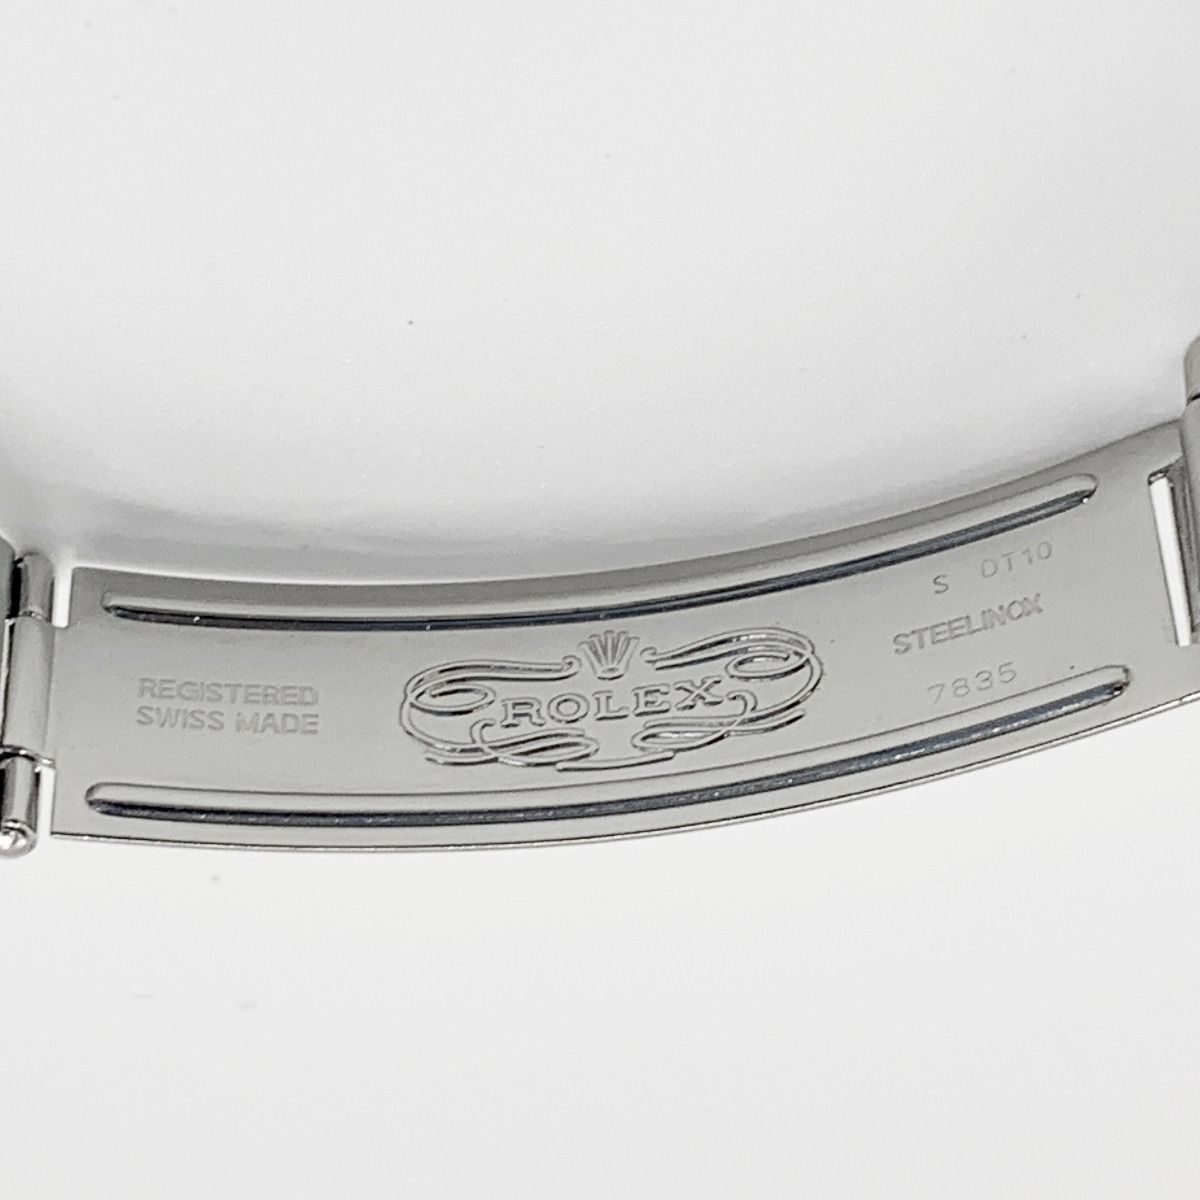 〇〇ROLEX ロレックス オイスターパーペチュアル デイト 自動巻き 腕時計 1500 シルバー OH済み - メルカリ